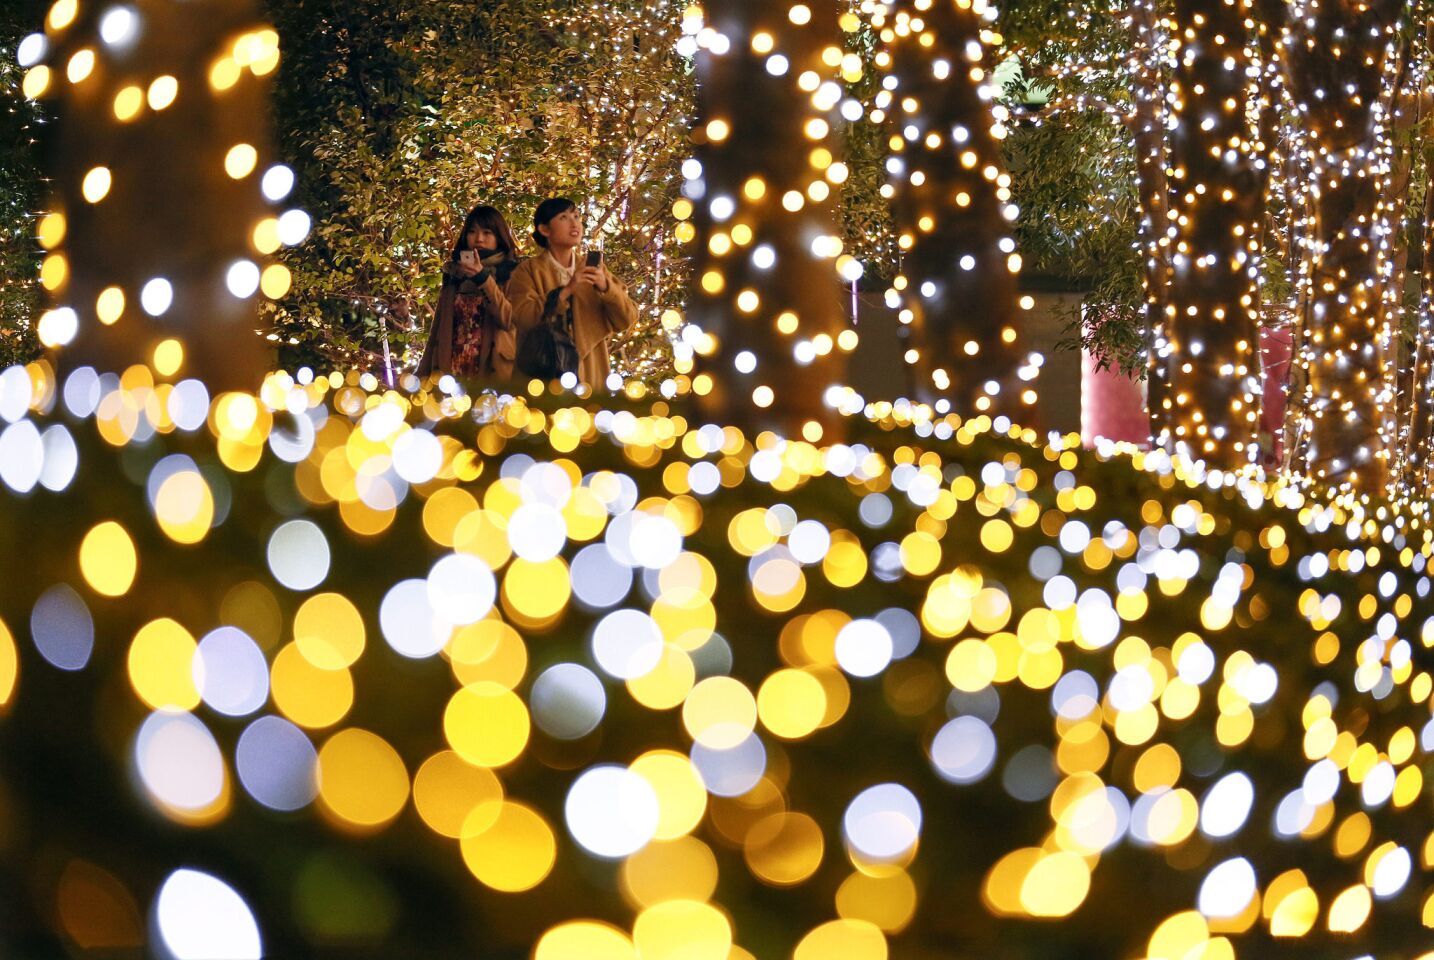 Festive Christmas lights set the Shinjuku business district aglow.